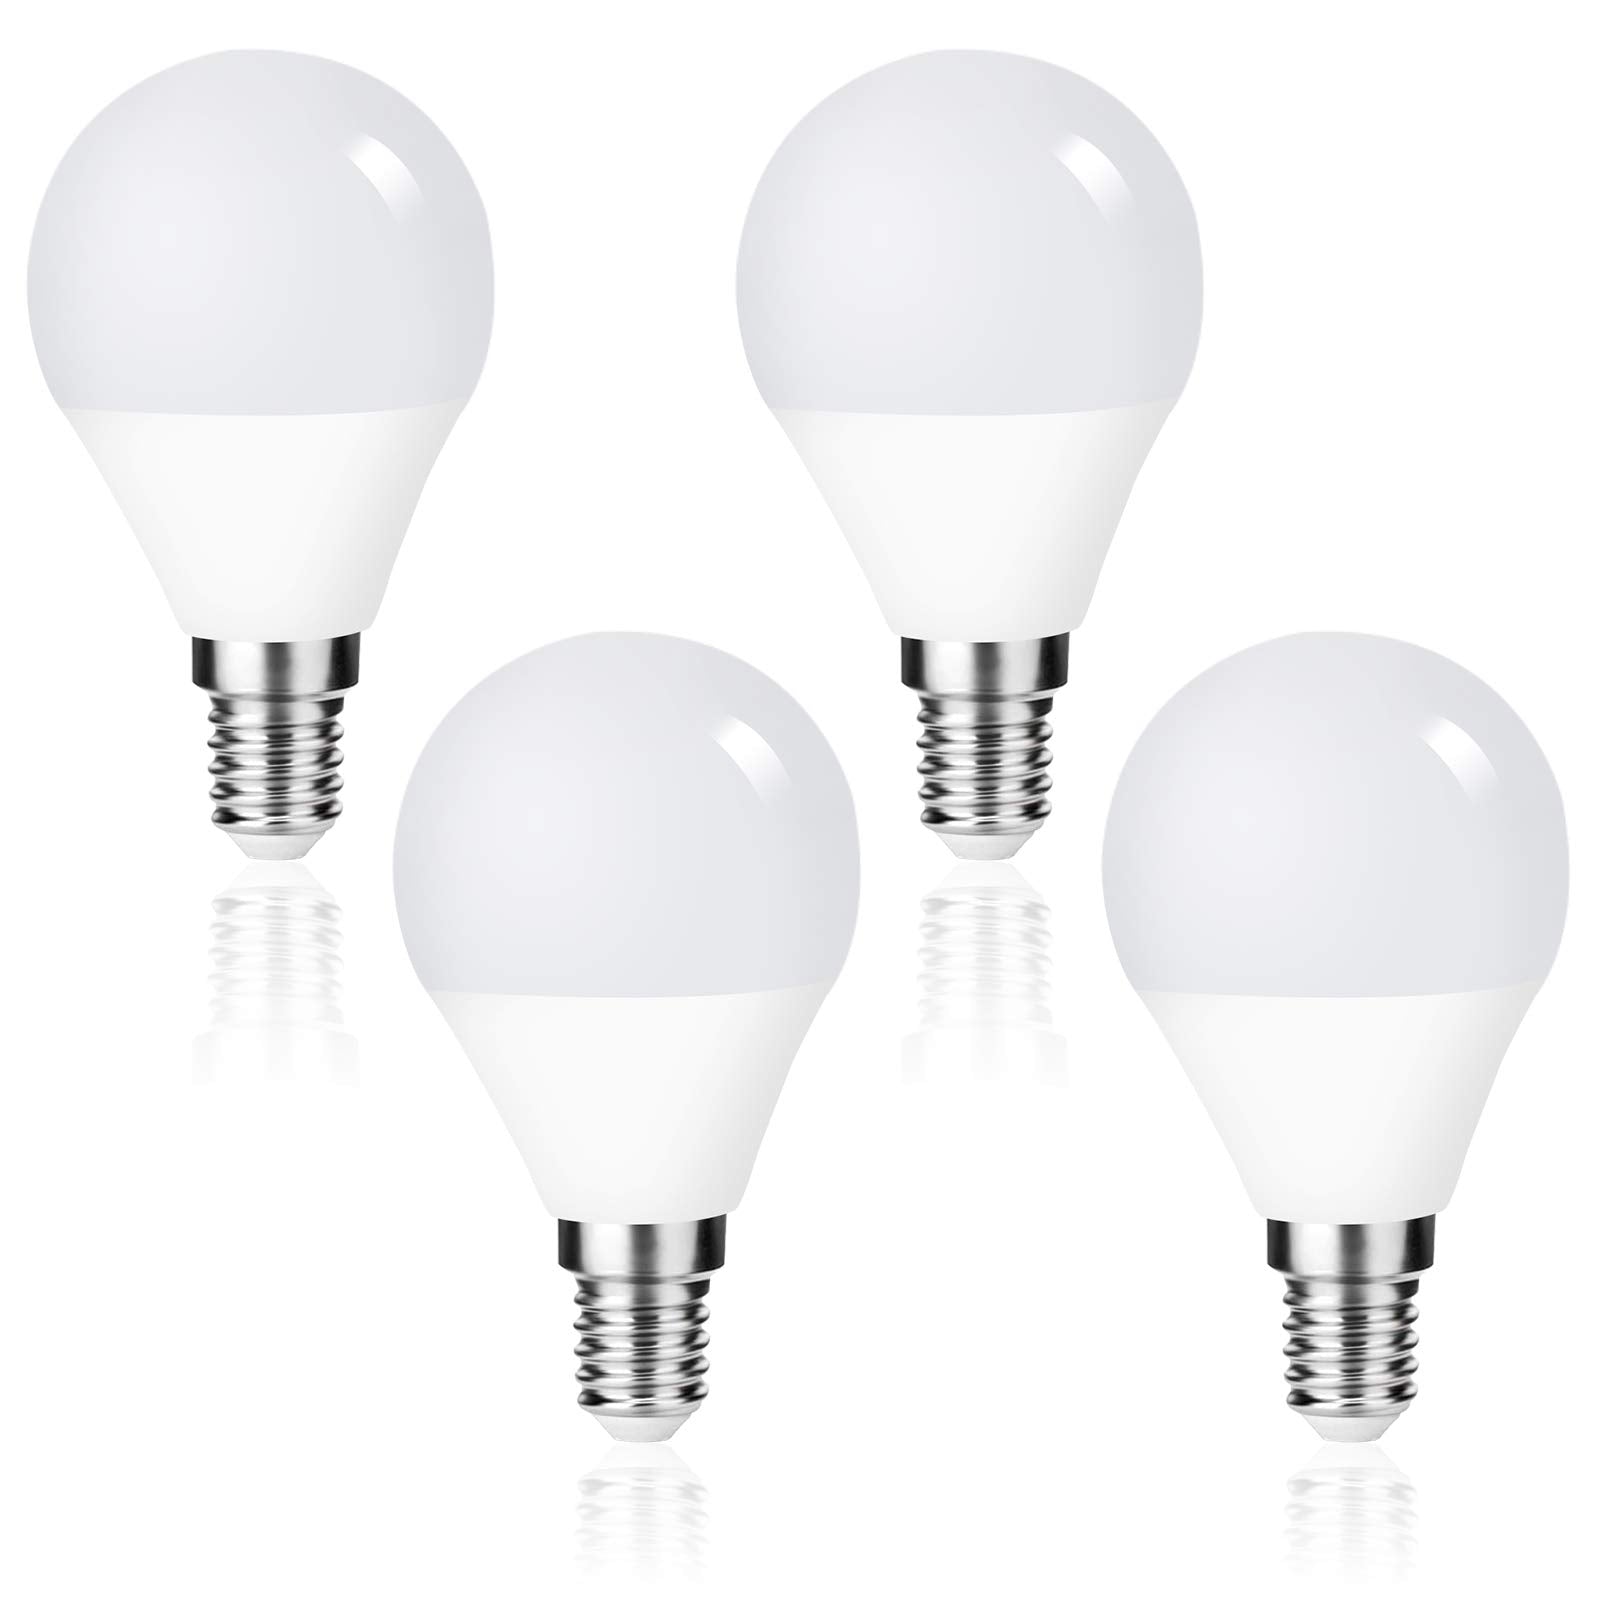 E14 LED Bulbs 5W G45 Edison Screw Light Bulb Globe Golf Ball Lights Plastic Frosted 25W Incandescent Bulb Equivalent,Non-dimmable Lamp Warm White 3000K,Pack of 4 Energy Saving Bulbs